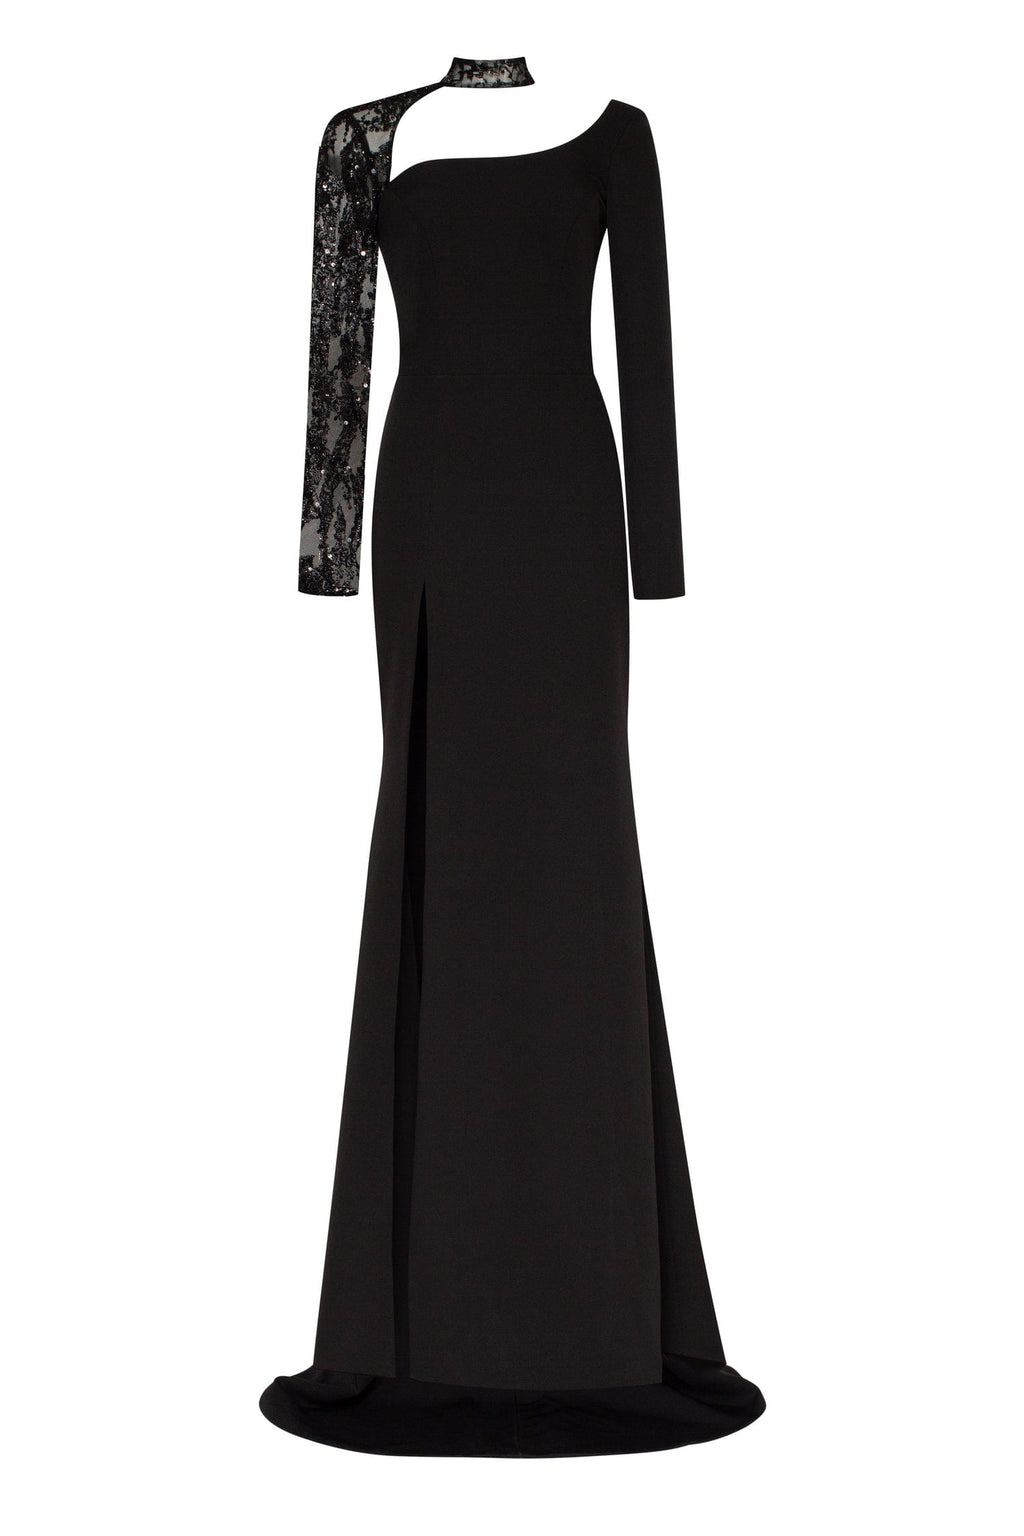 Black Party Wear Dress - Plus size Dresses - Lotuslane.in